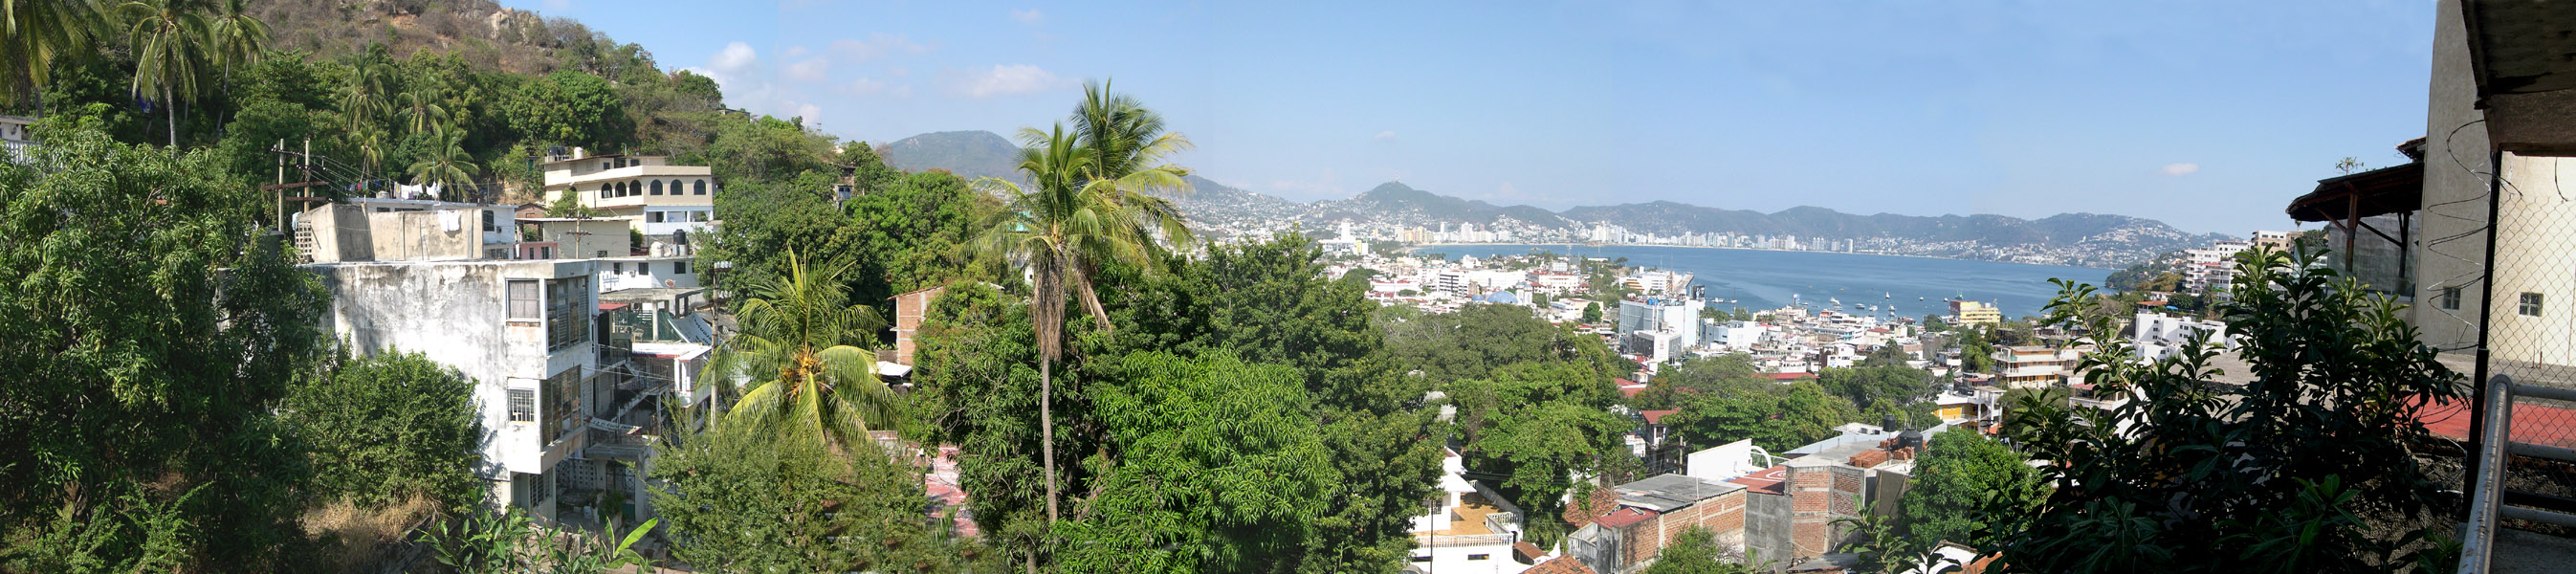 Acapulco - El Mirador Hotel, panoramic view from La Mira Alberca (pool)